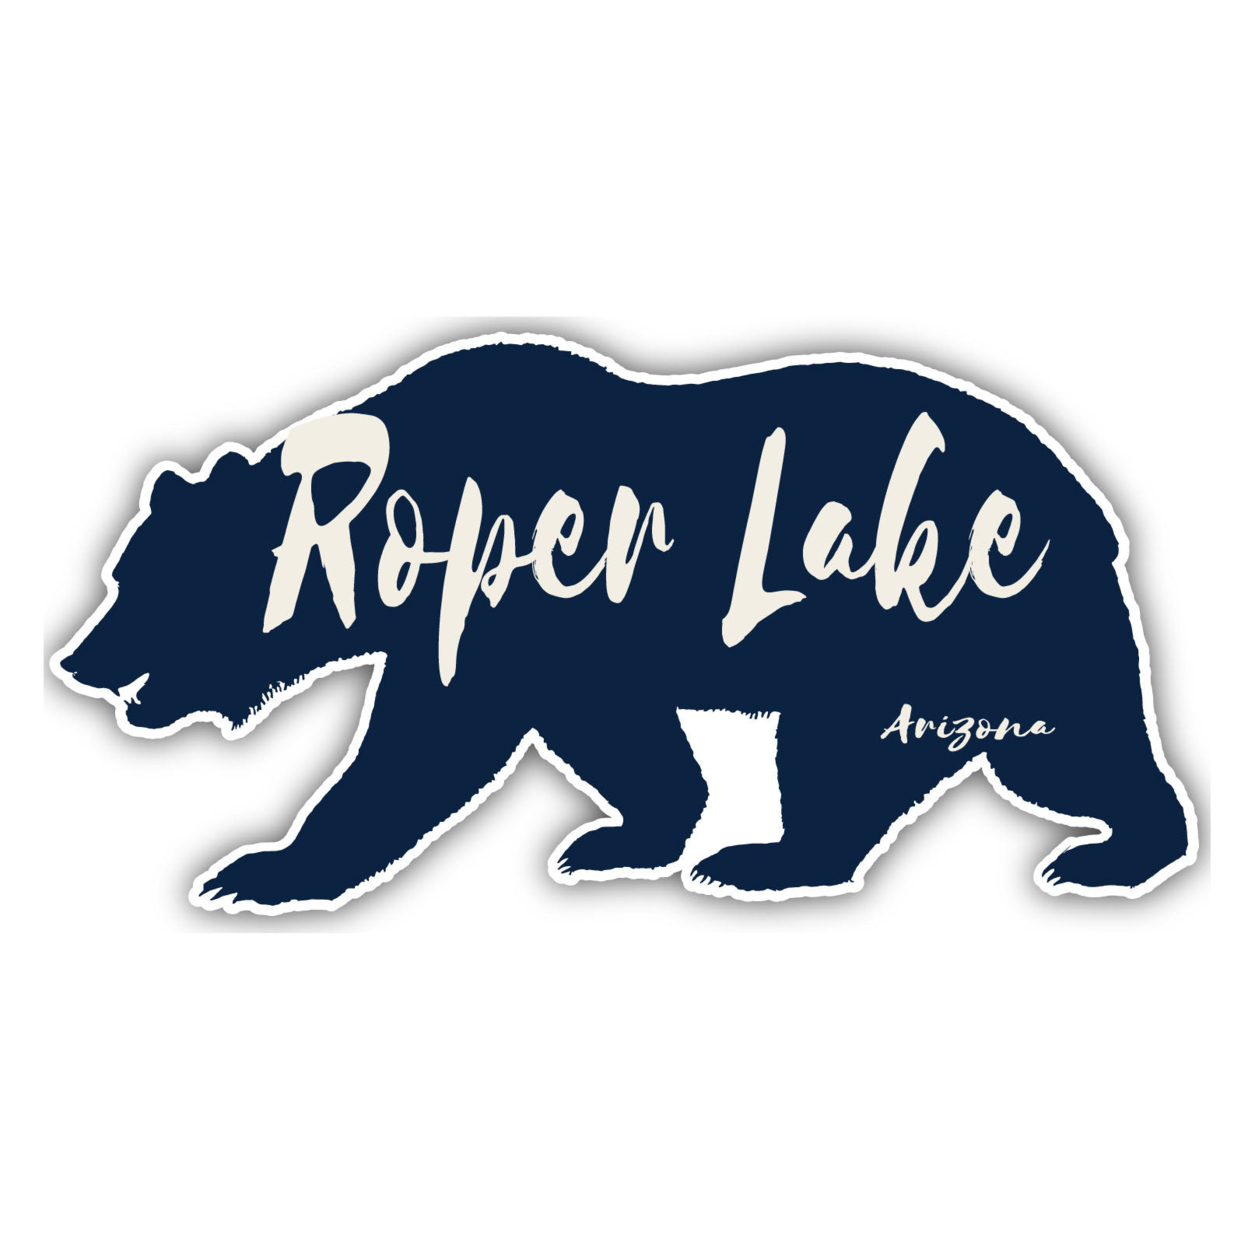 Roper Lake Arizona Souvenir Decorative Stickers (Choose Theme And Size) - Single Unit, 2-Inch, Bear